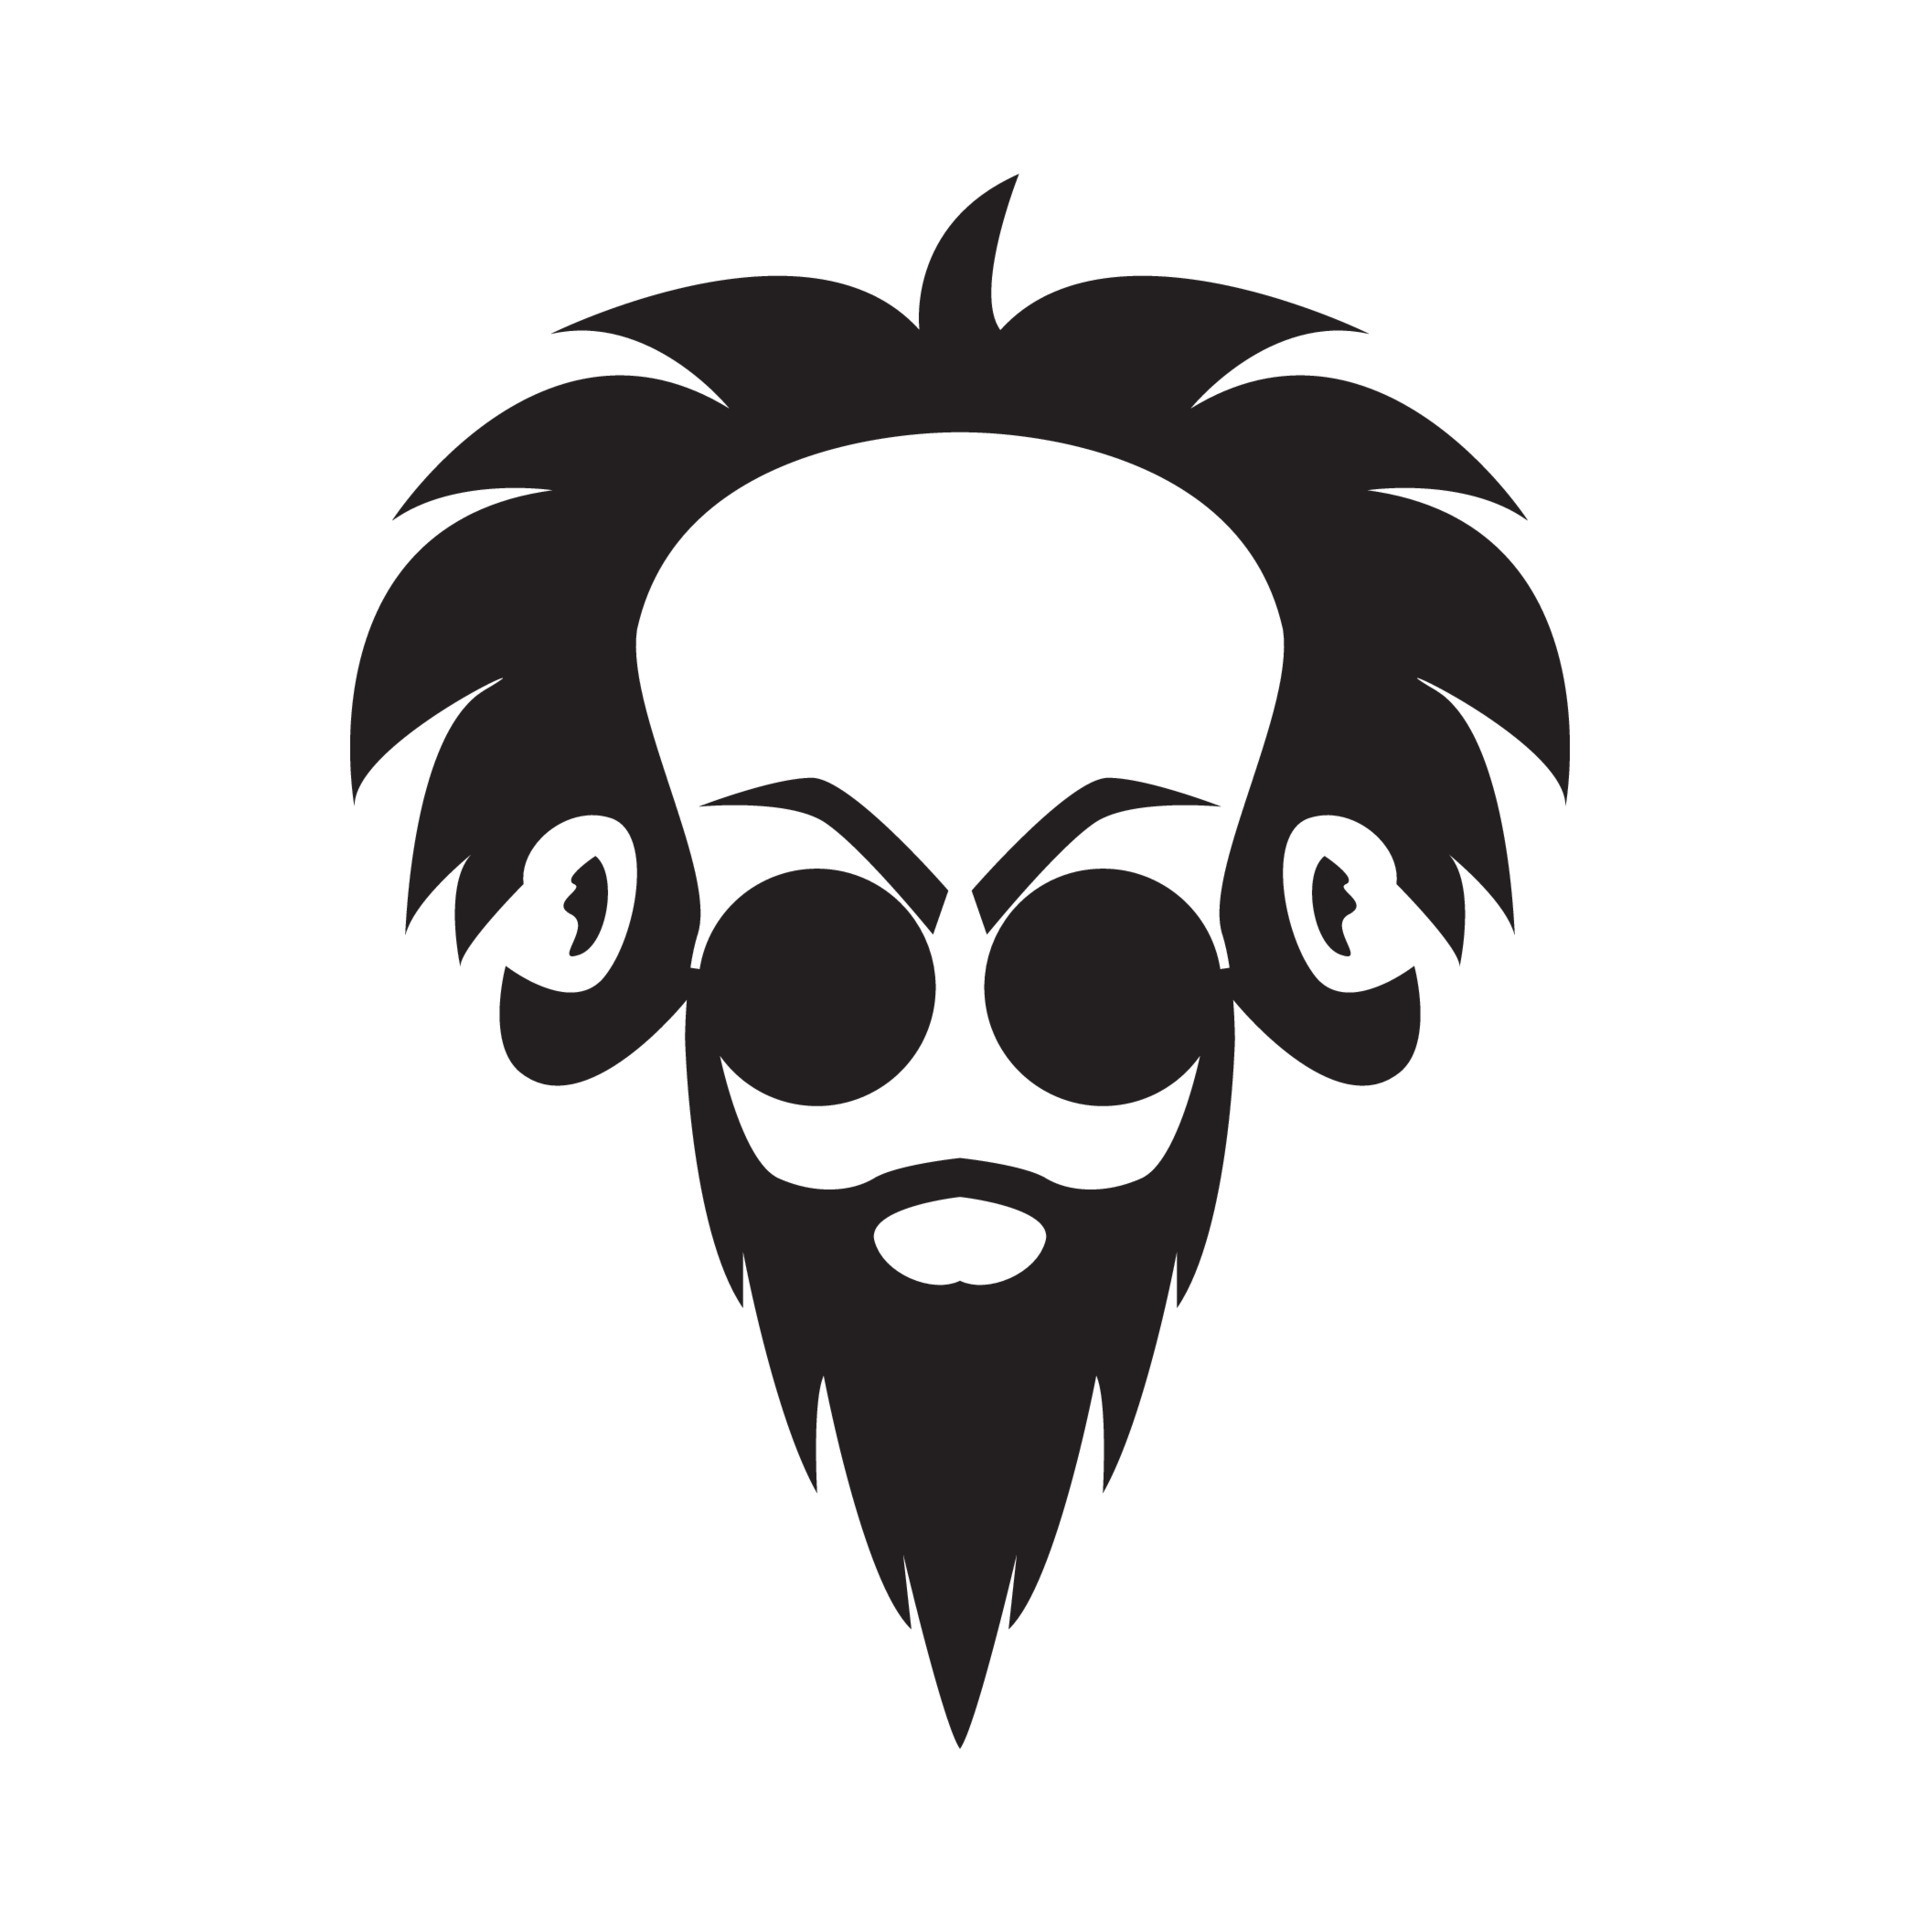 man bald science logo symbol vector icon illustration graphic design ...